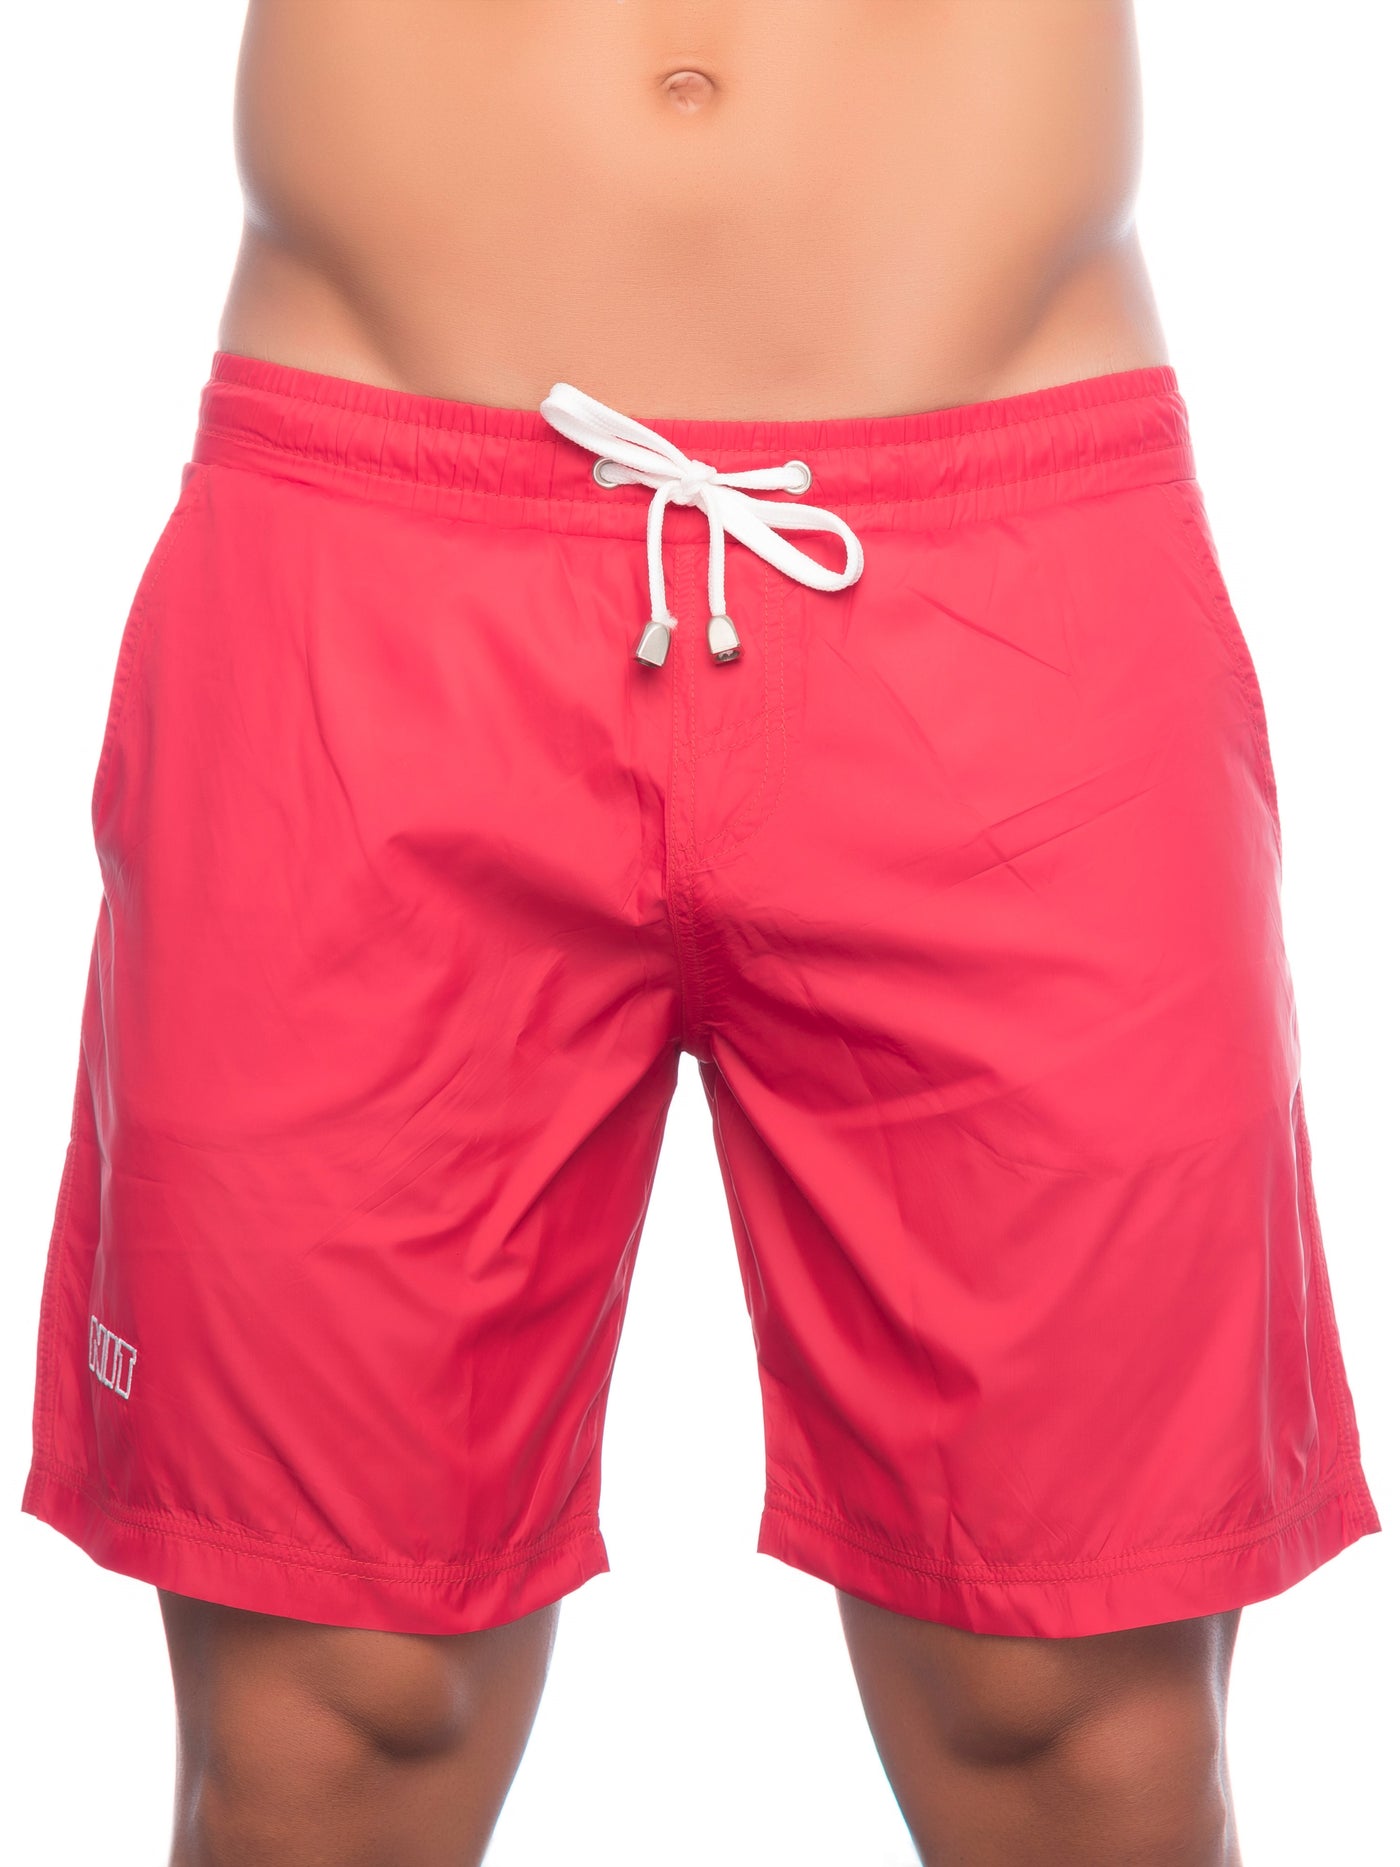 NIT Oscar Bermuda Shorts Men's Paddleboarding Beach Shorts Red - Activemen Clothing